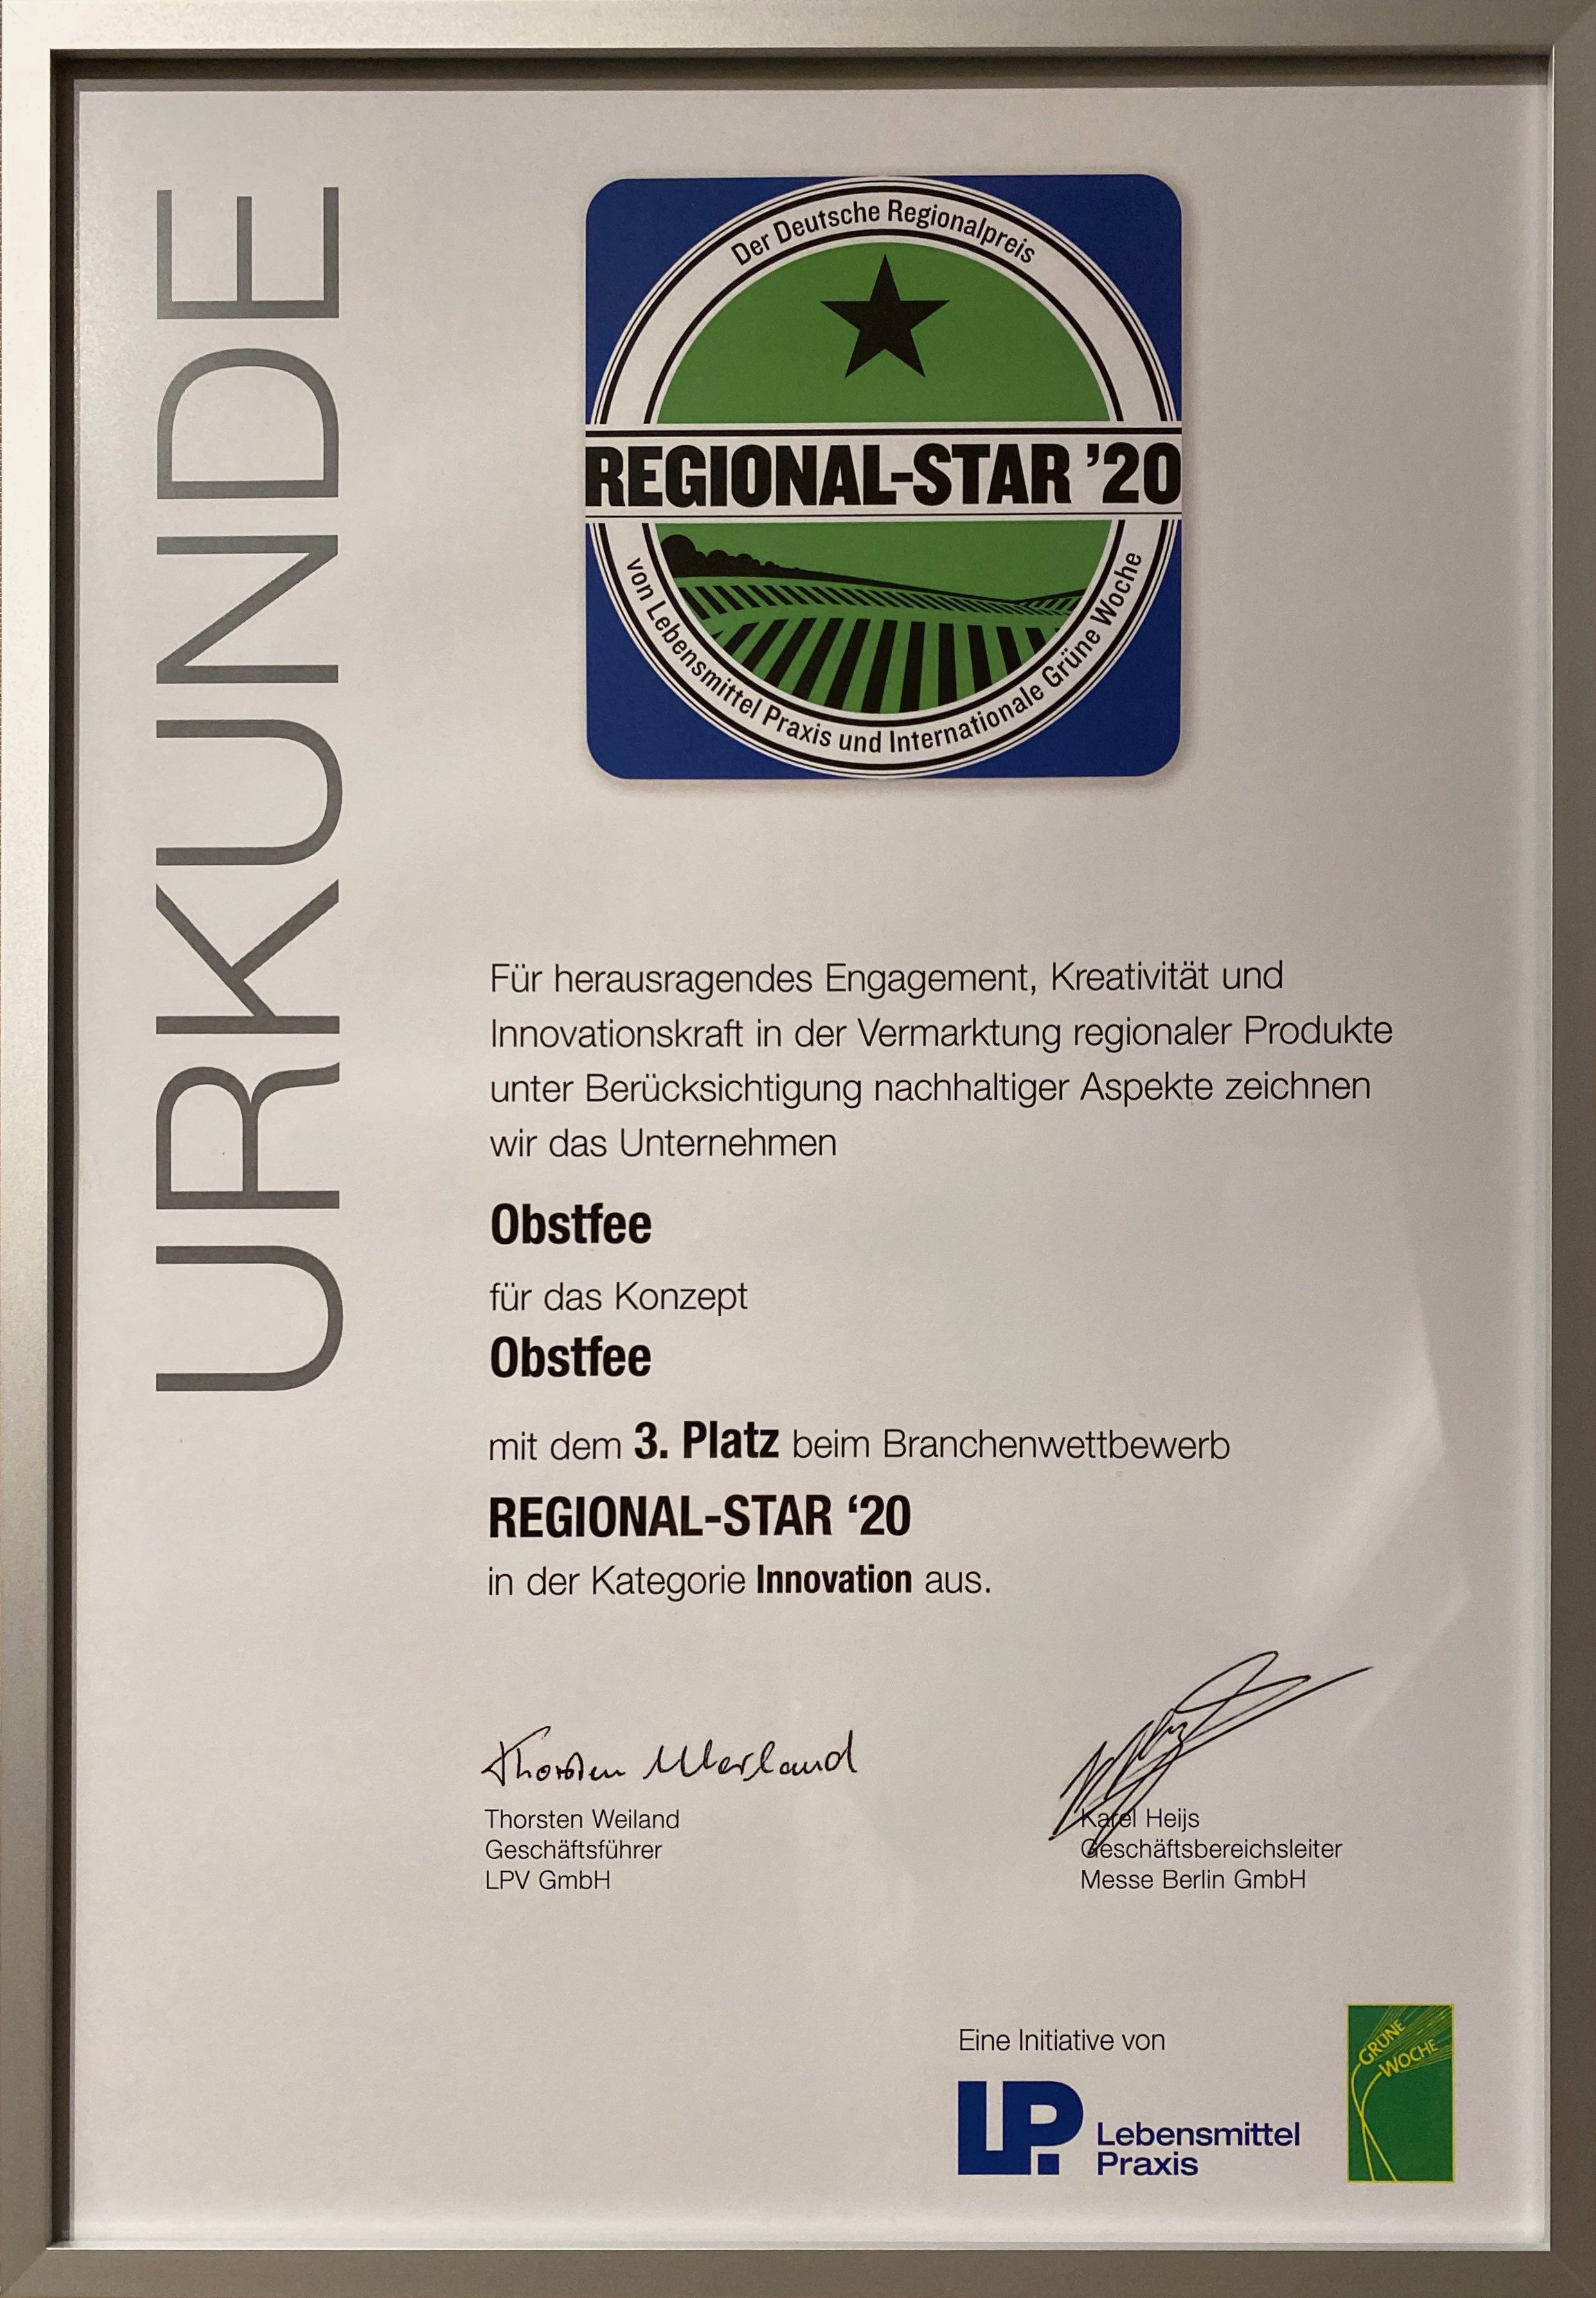 Regional-Star’20